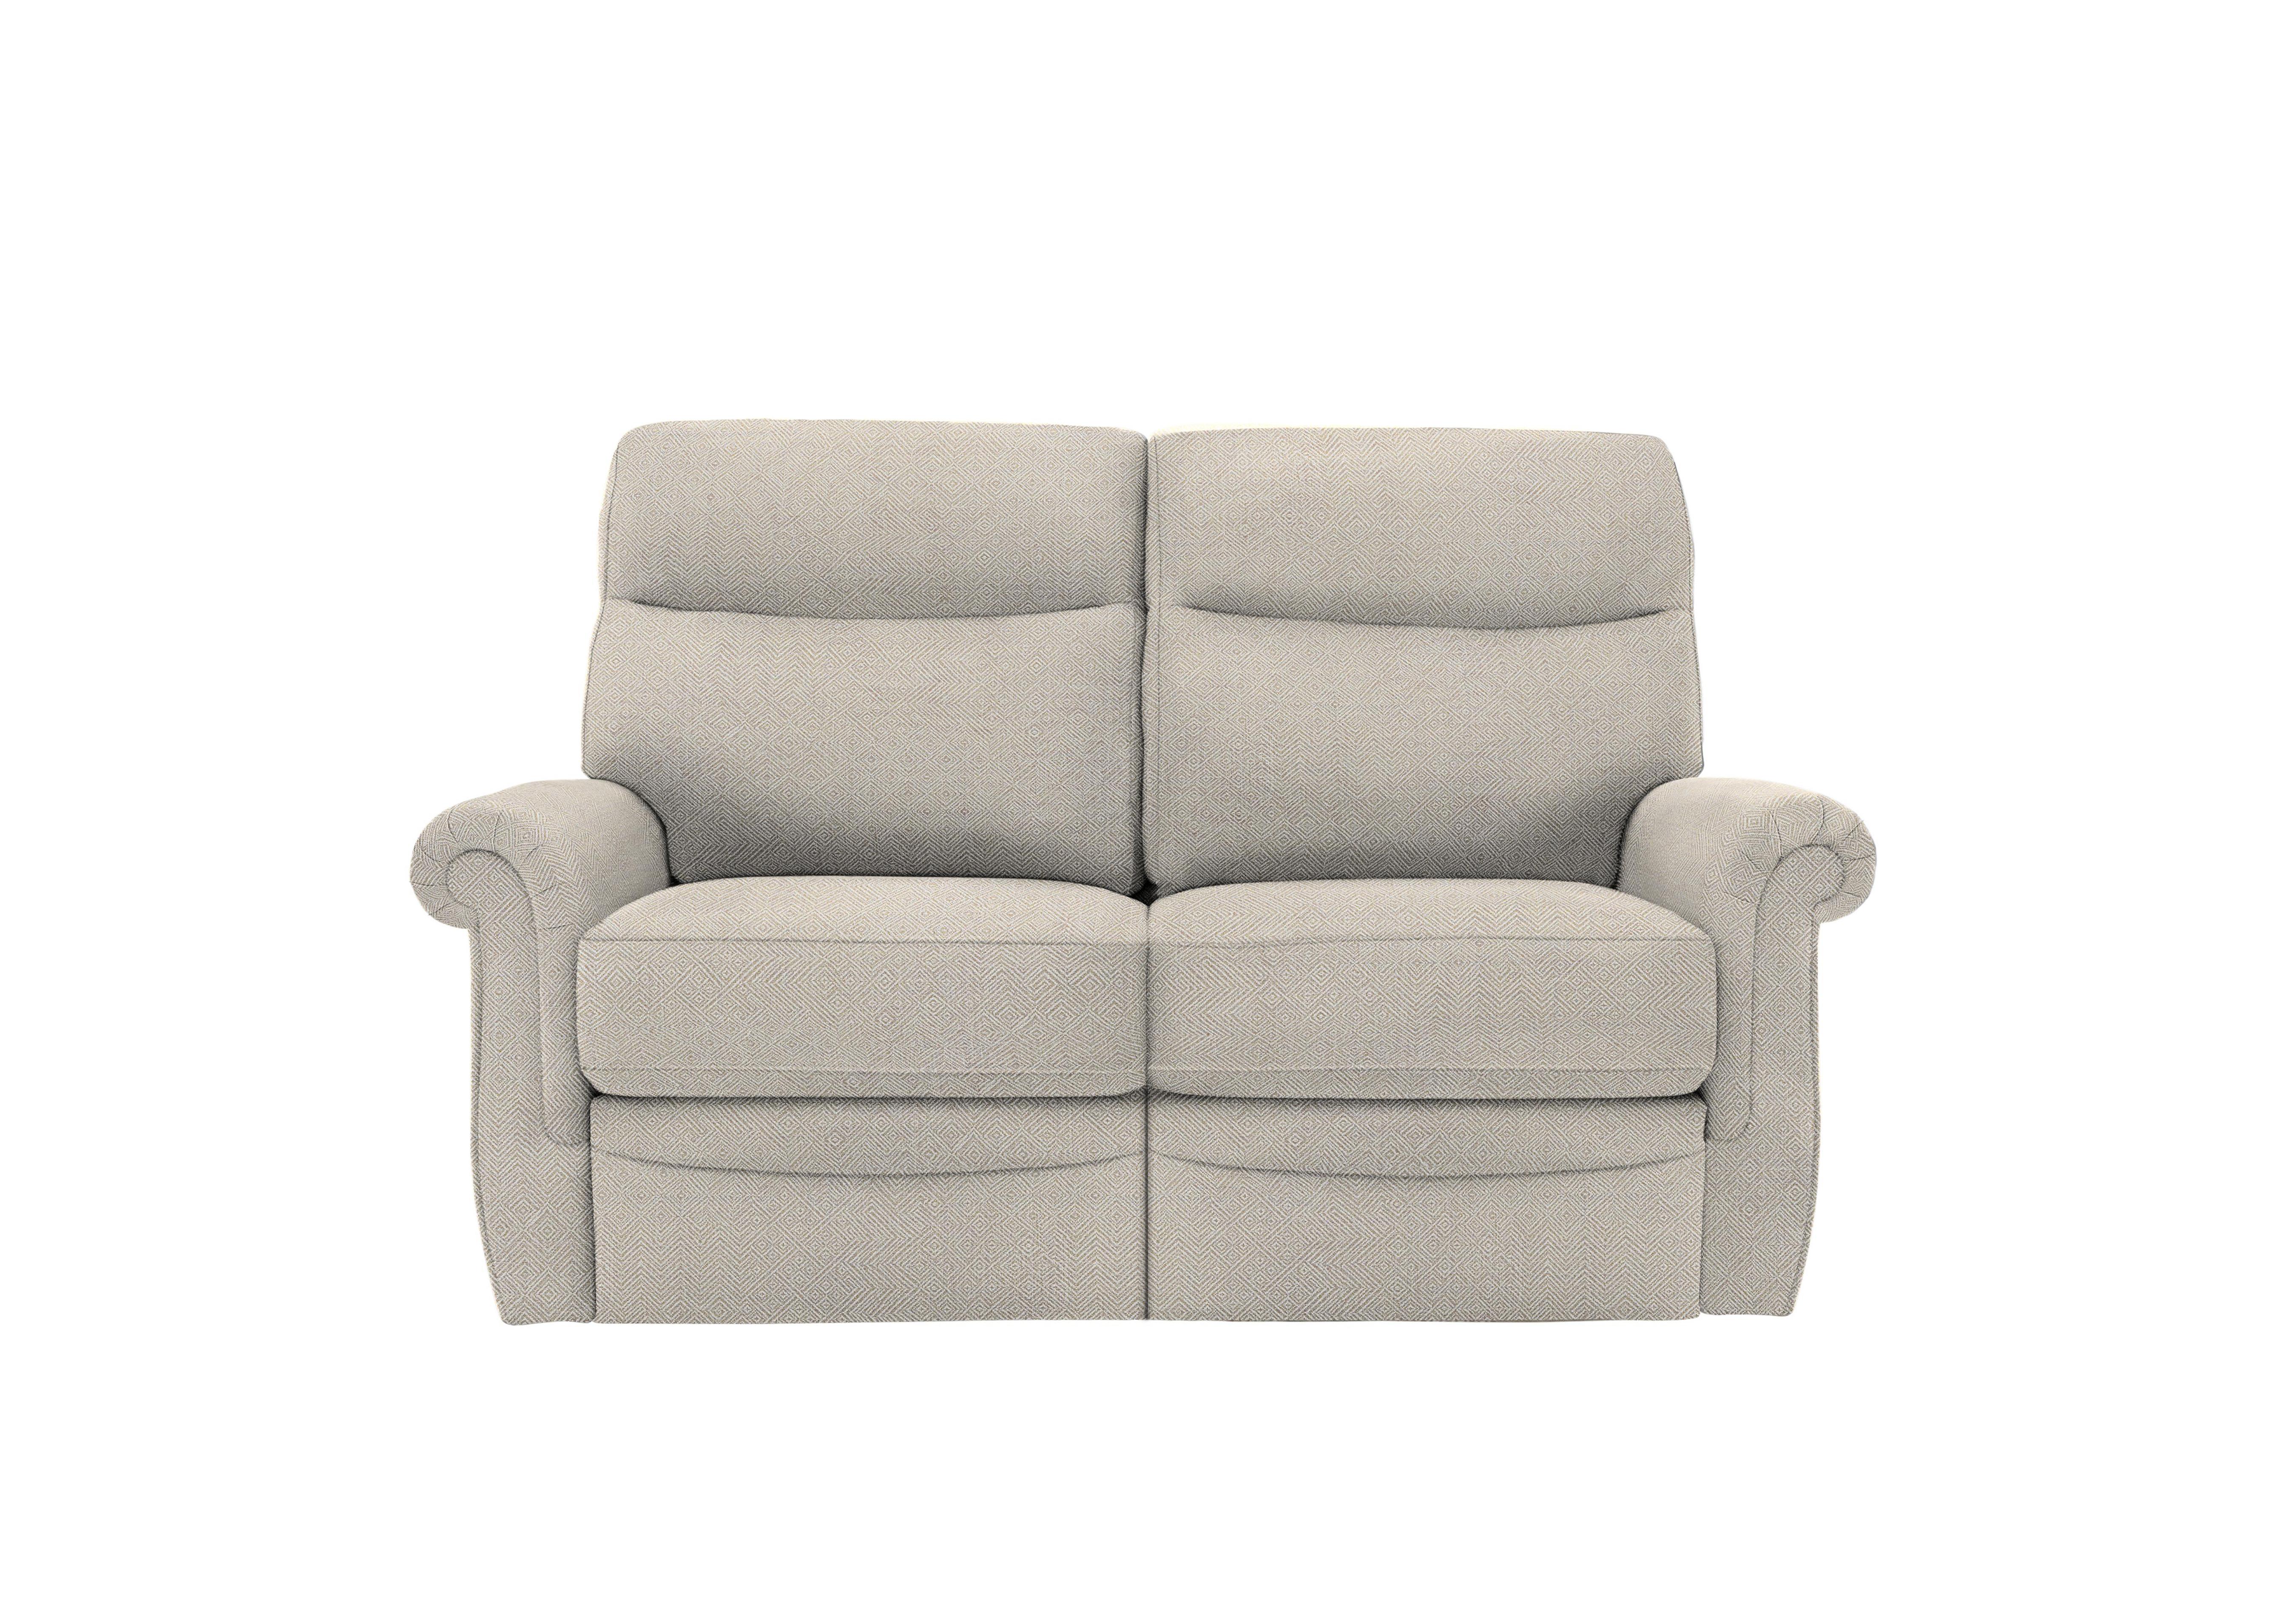 Avon 2 Seater Fabric Sofa in B011 Nebular Blush on Furniture Village